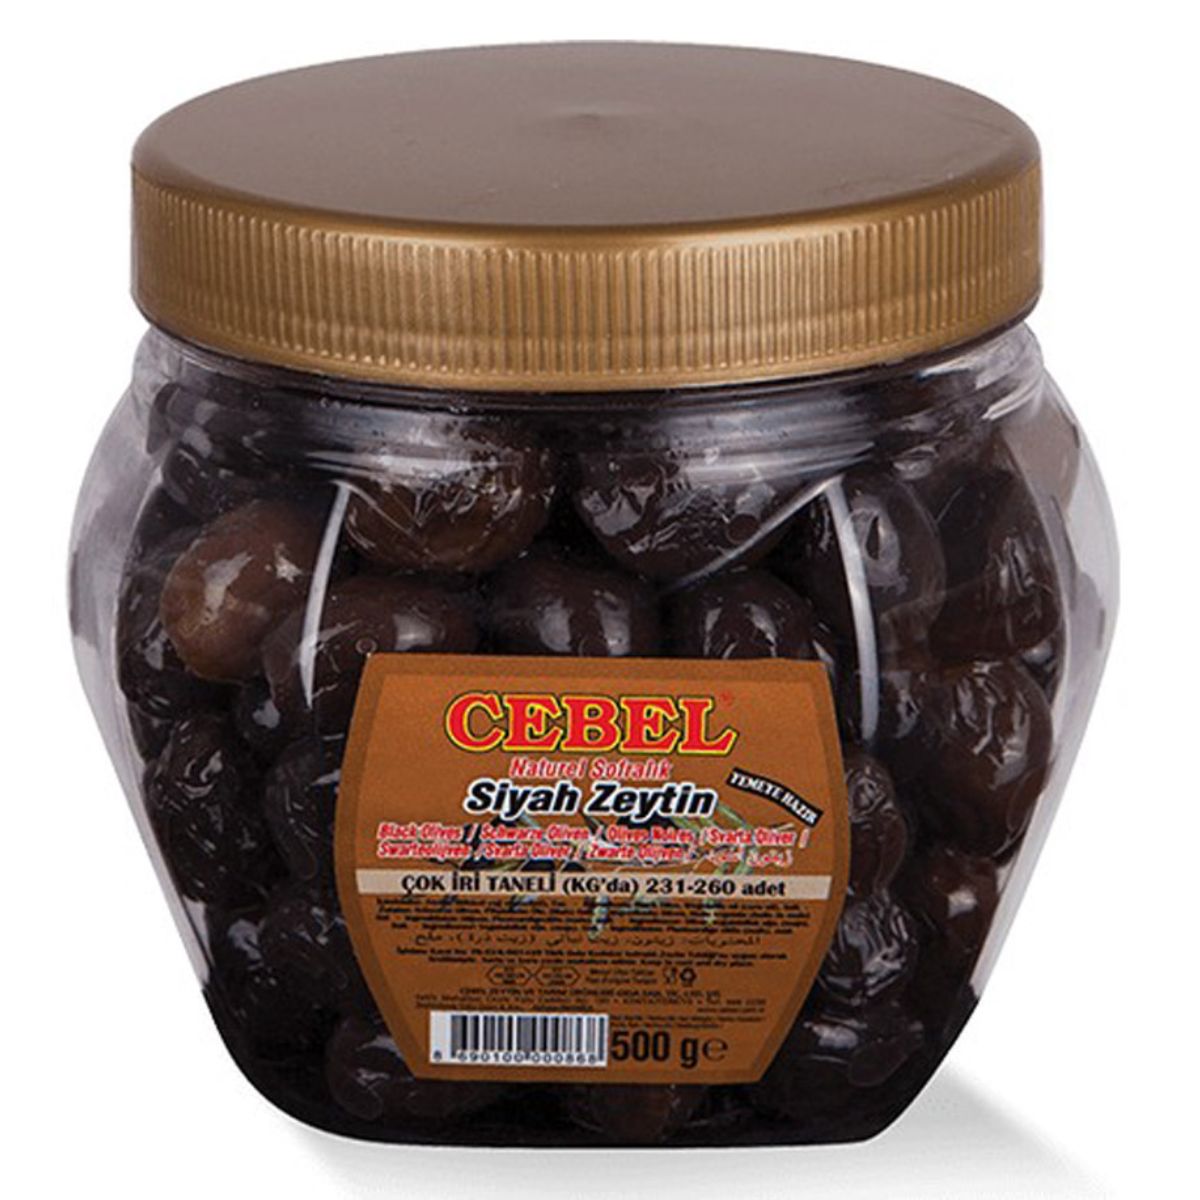 A jar of Cebel - Black Olives Very Coarse Grains - 500g on a white background.